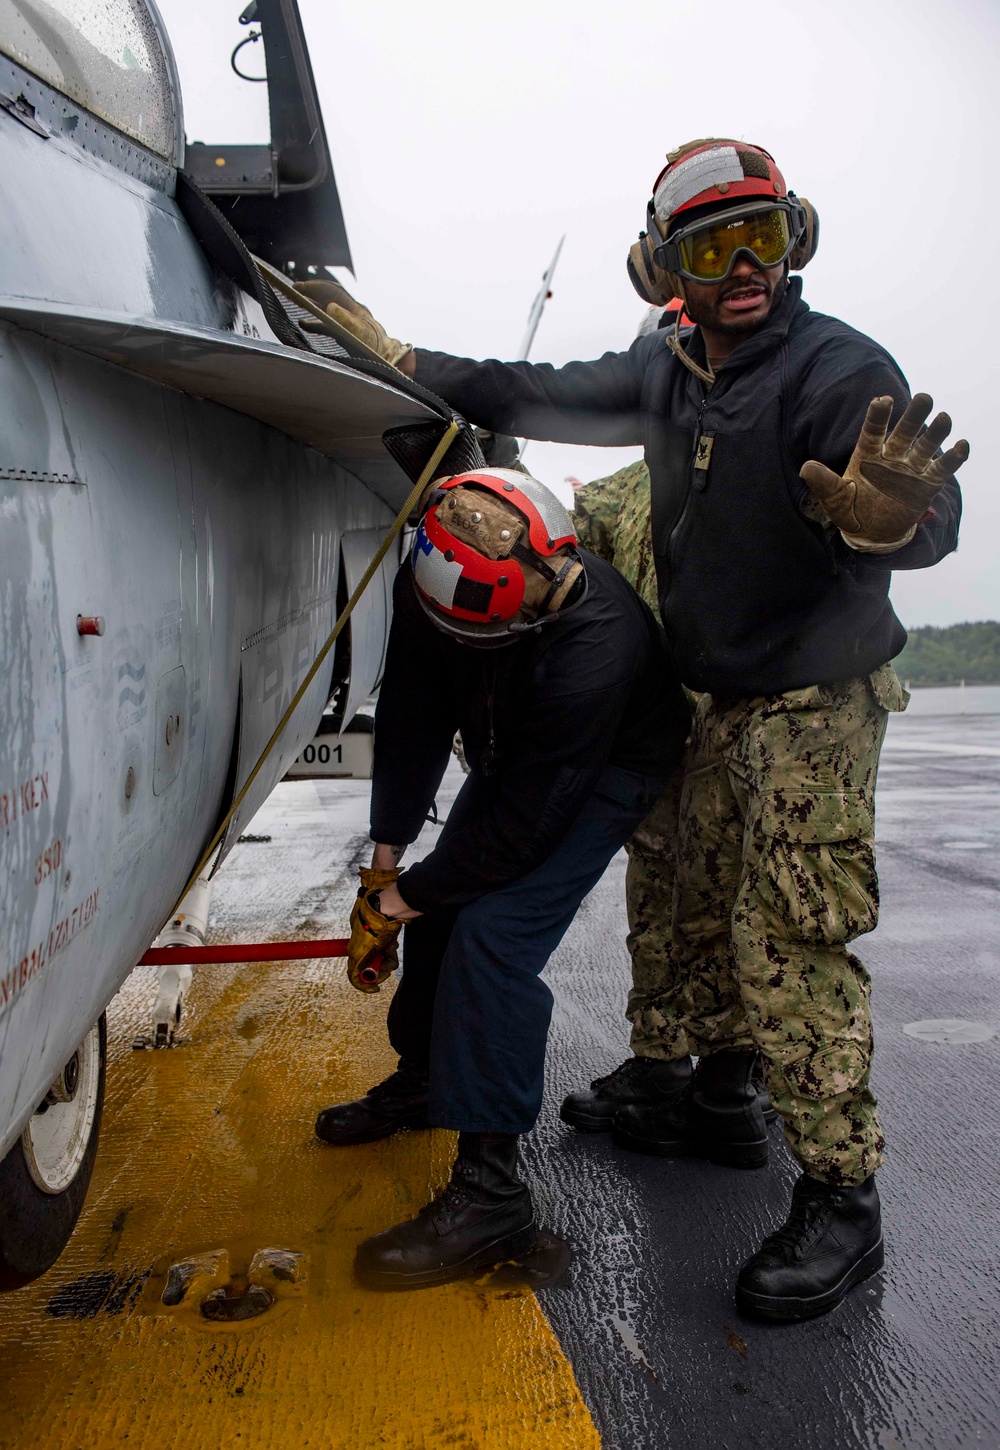 Sailors Conduct Training On The Flight Deck